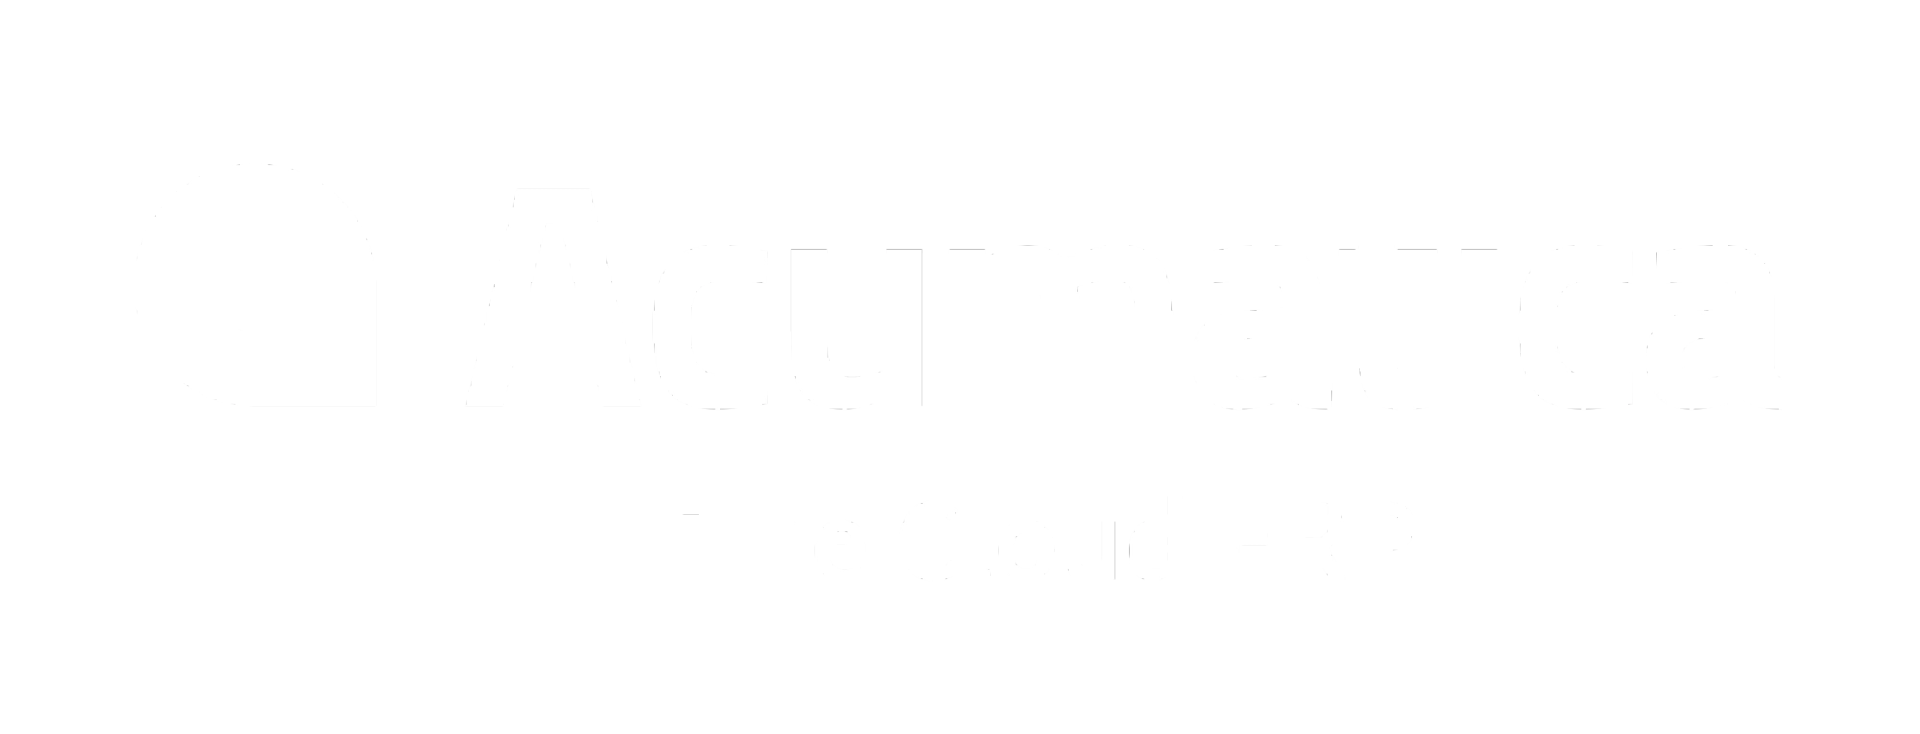 Acumatica Logo 